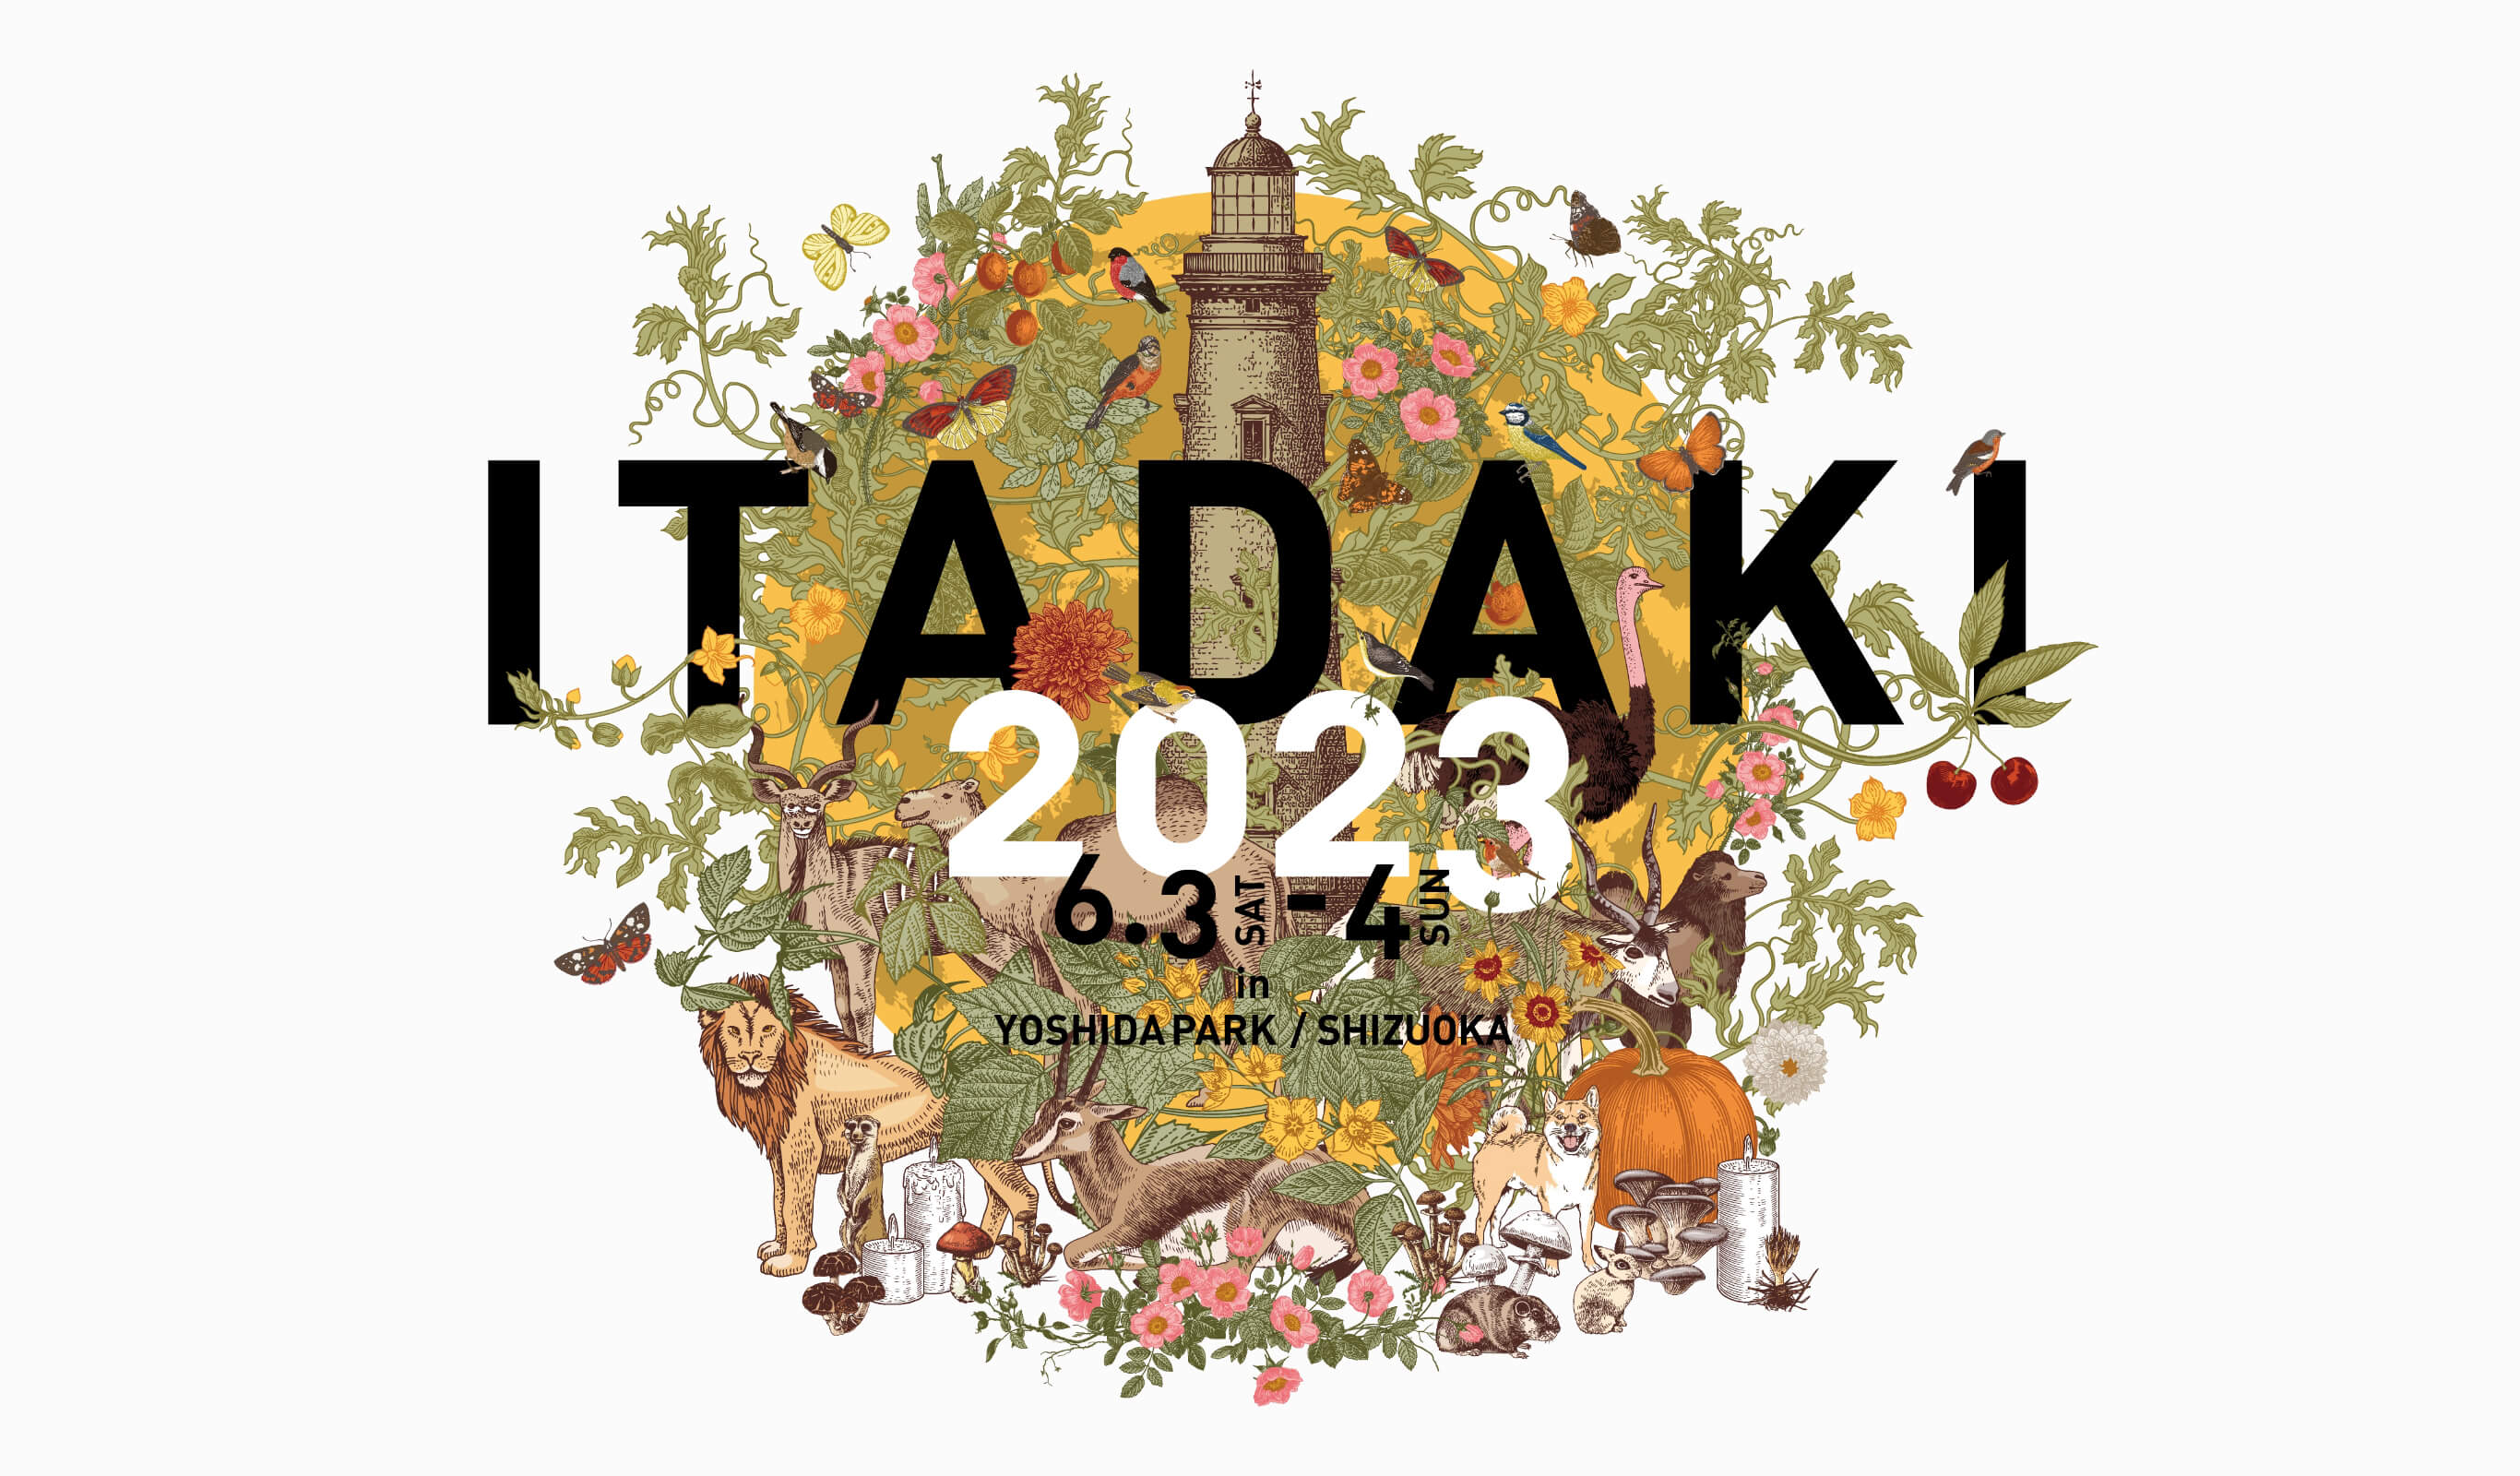 頂 -ITADAKI- 2023